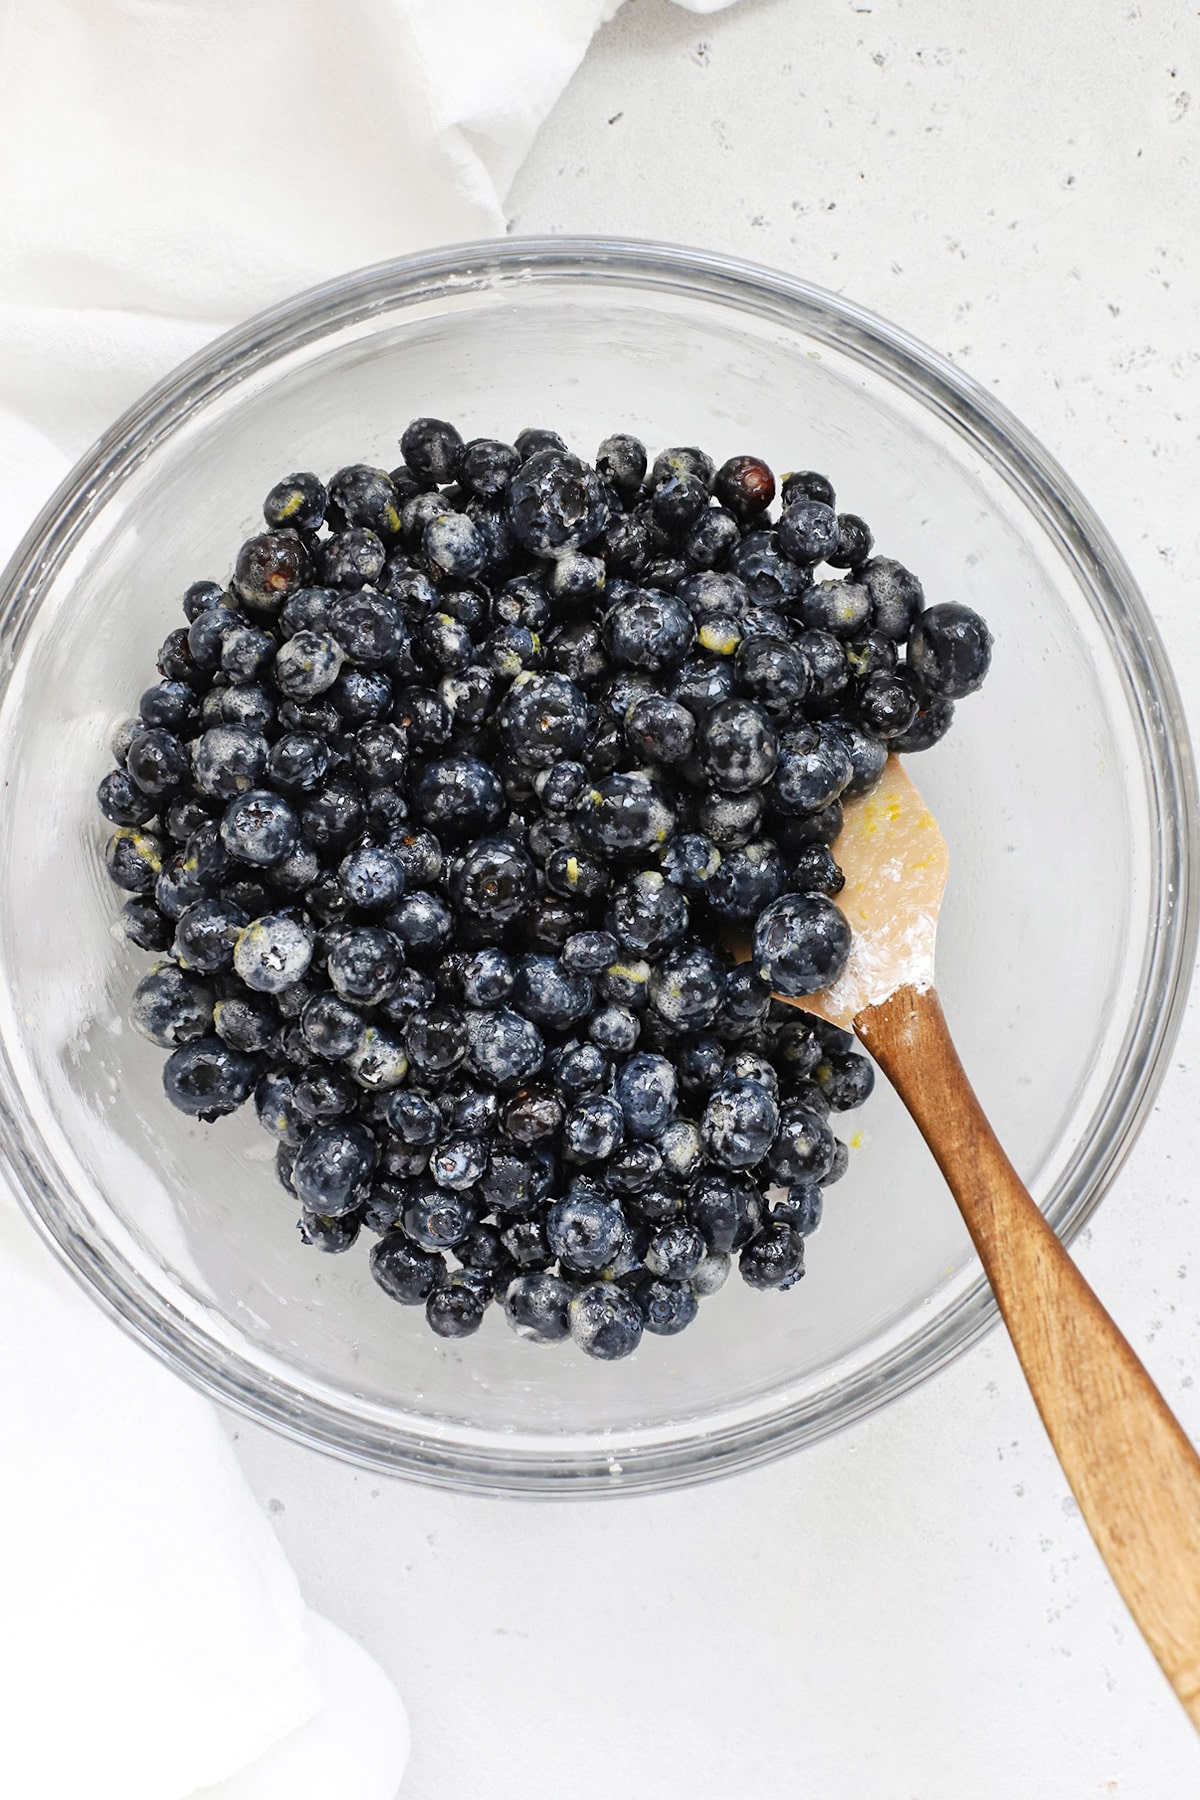 Mixing gluten-free blueberry crisp filling